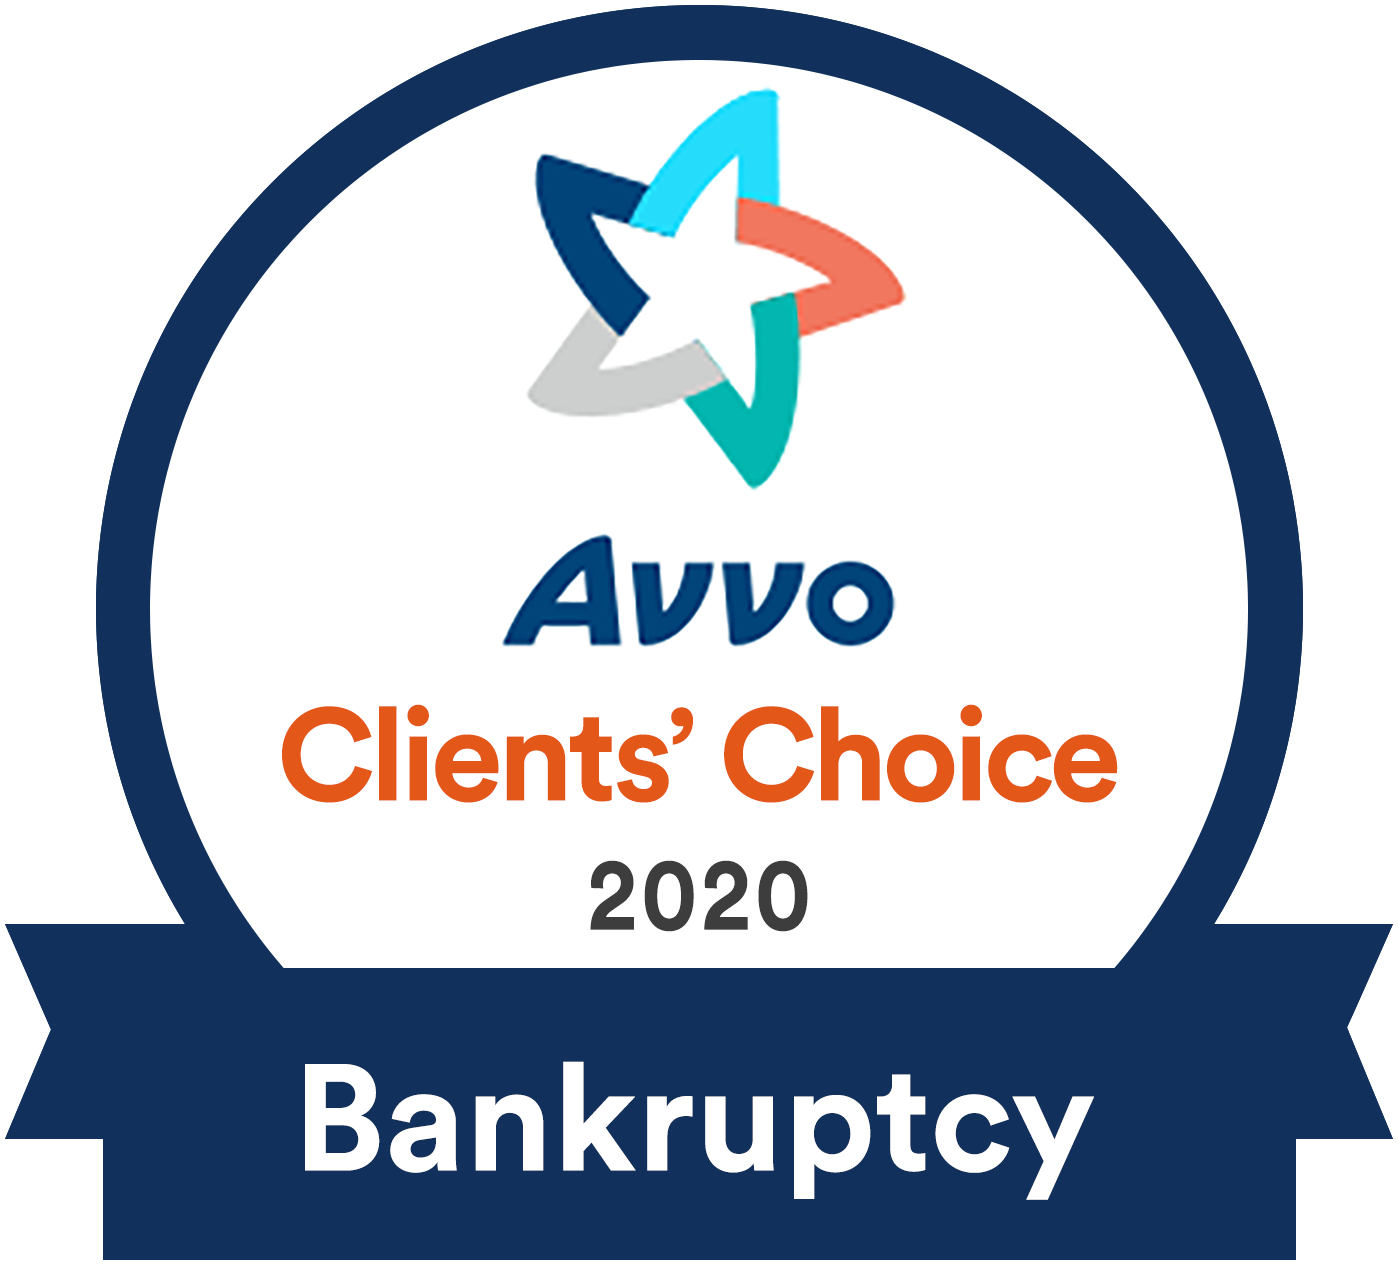 AVOO Clients' Choice logo